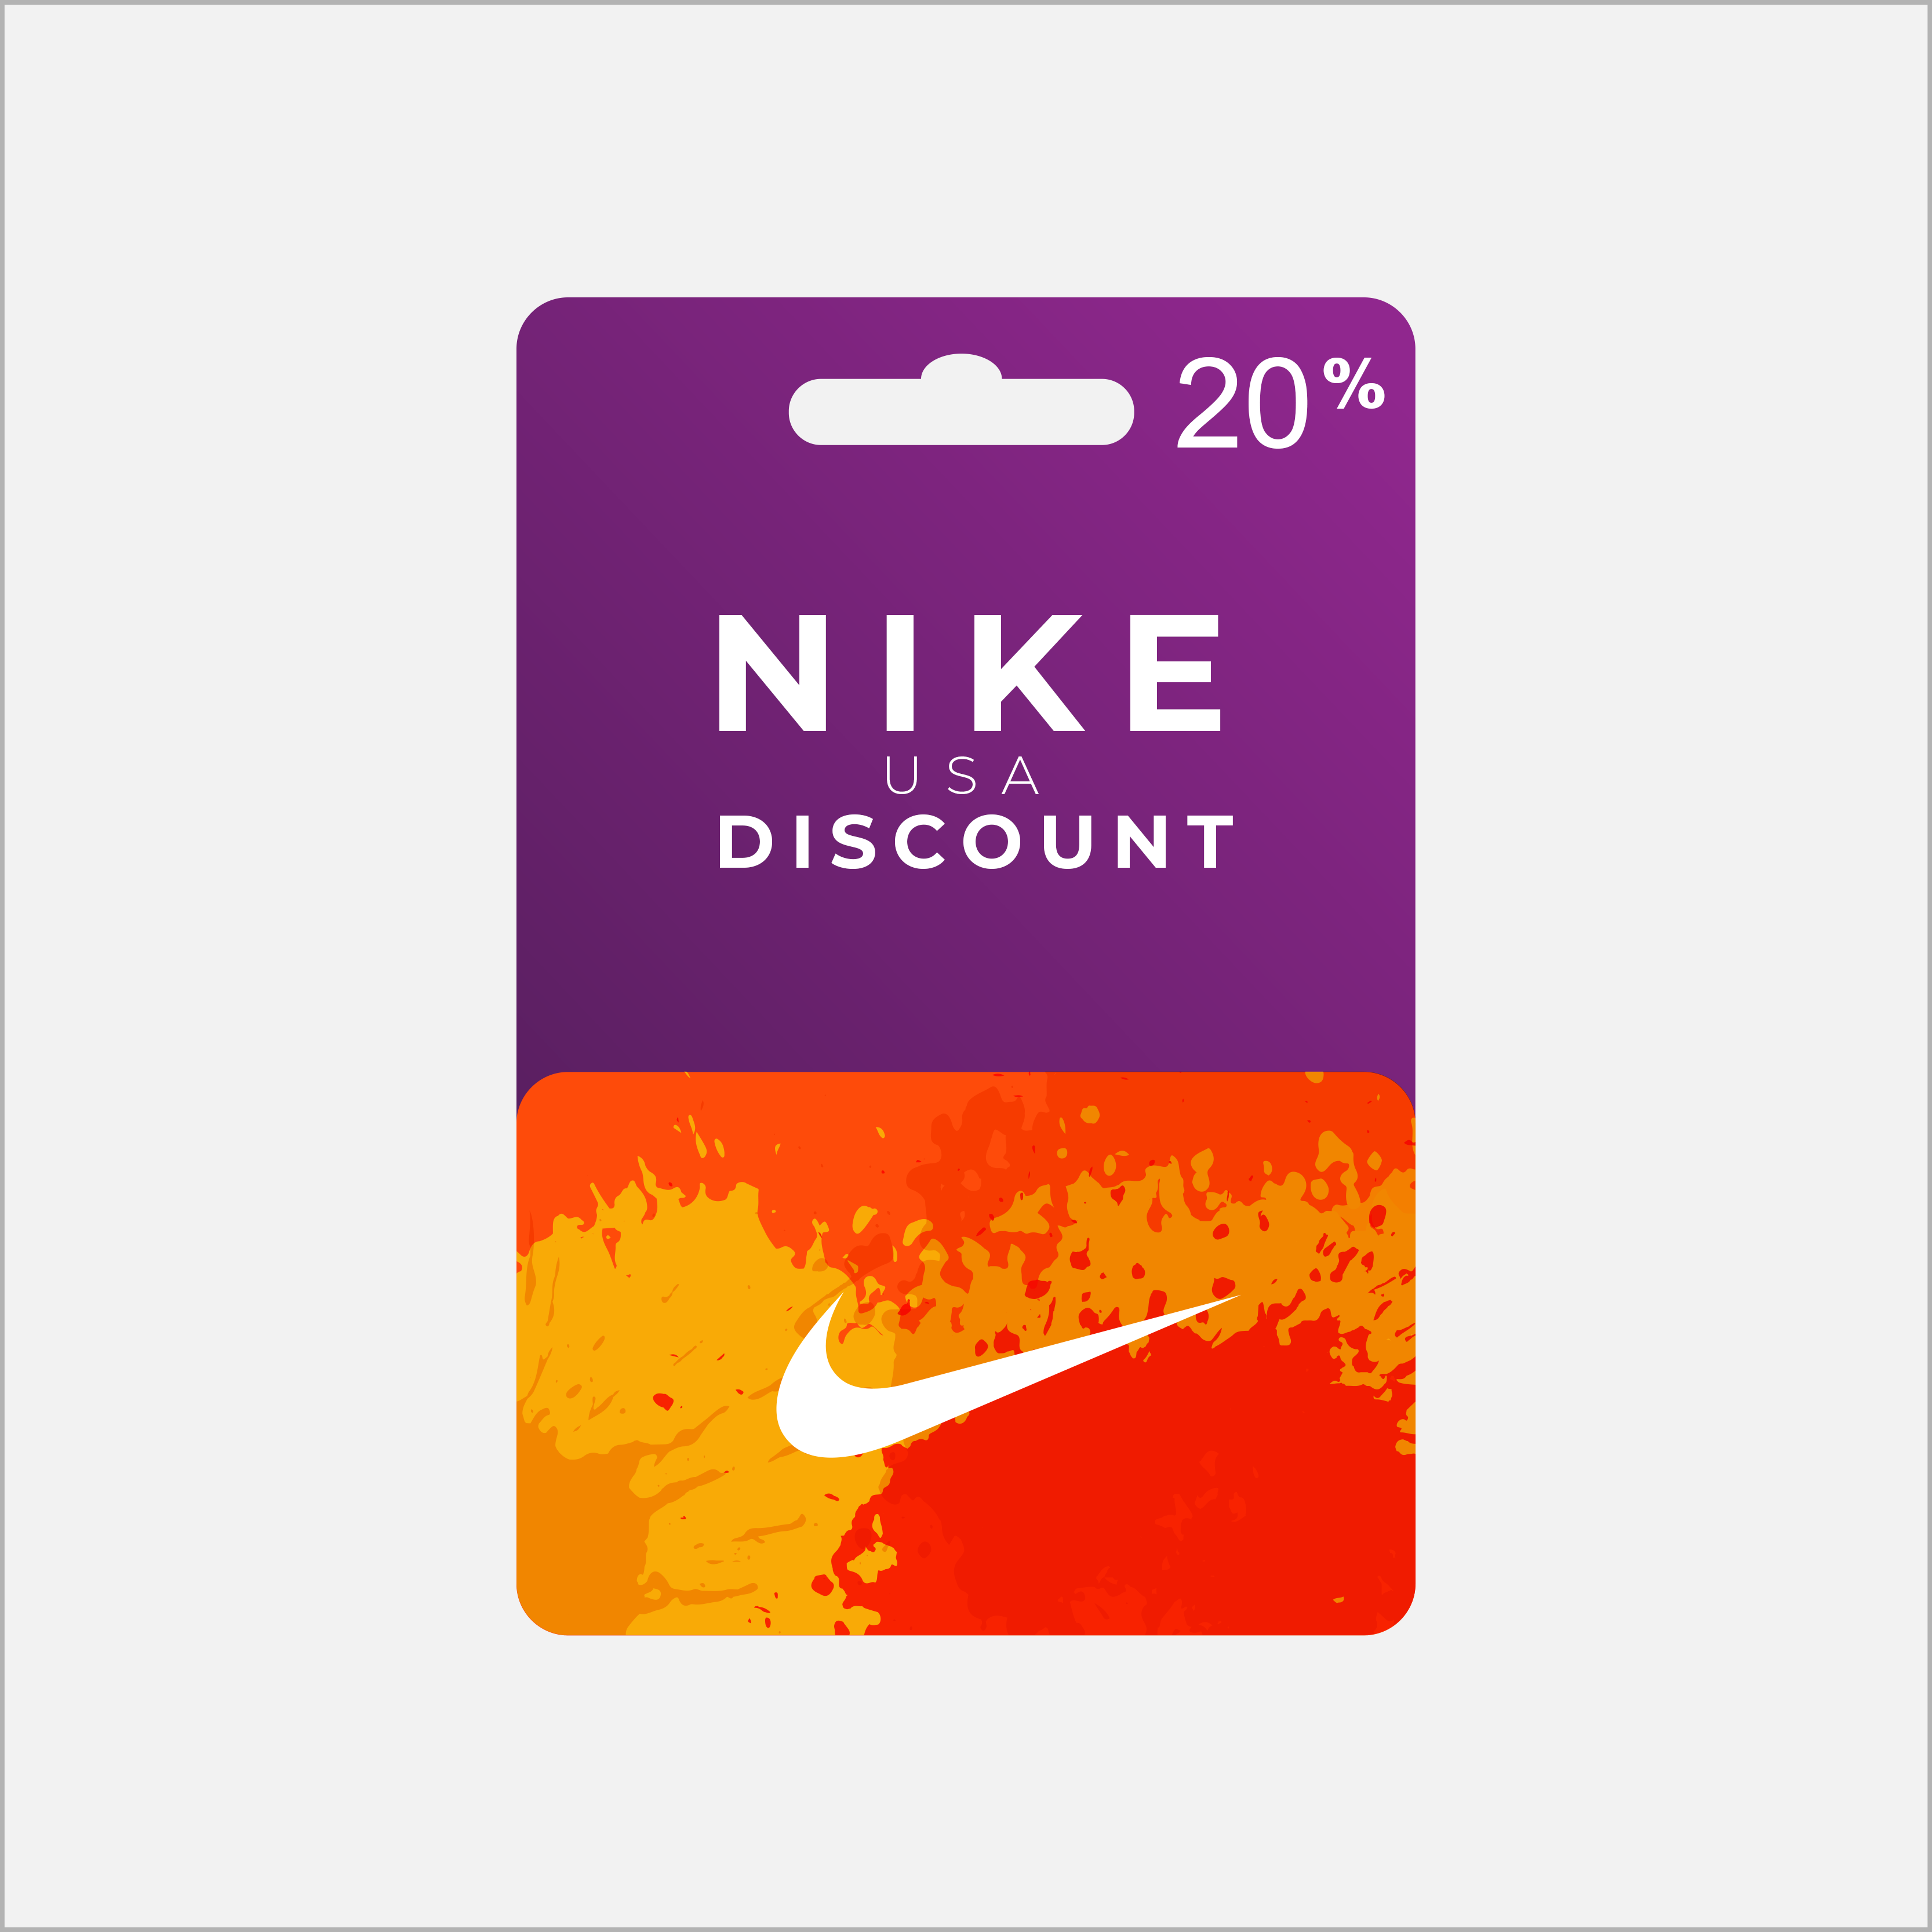 Nike USA Coupon Code - Nike Discount Codes